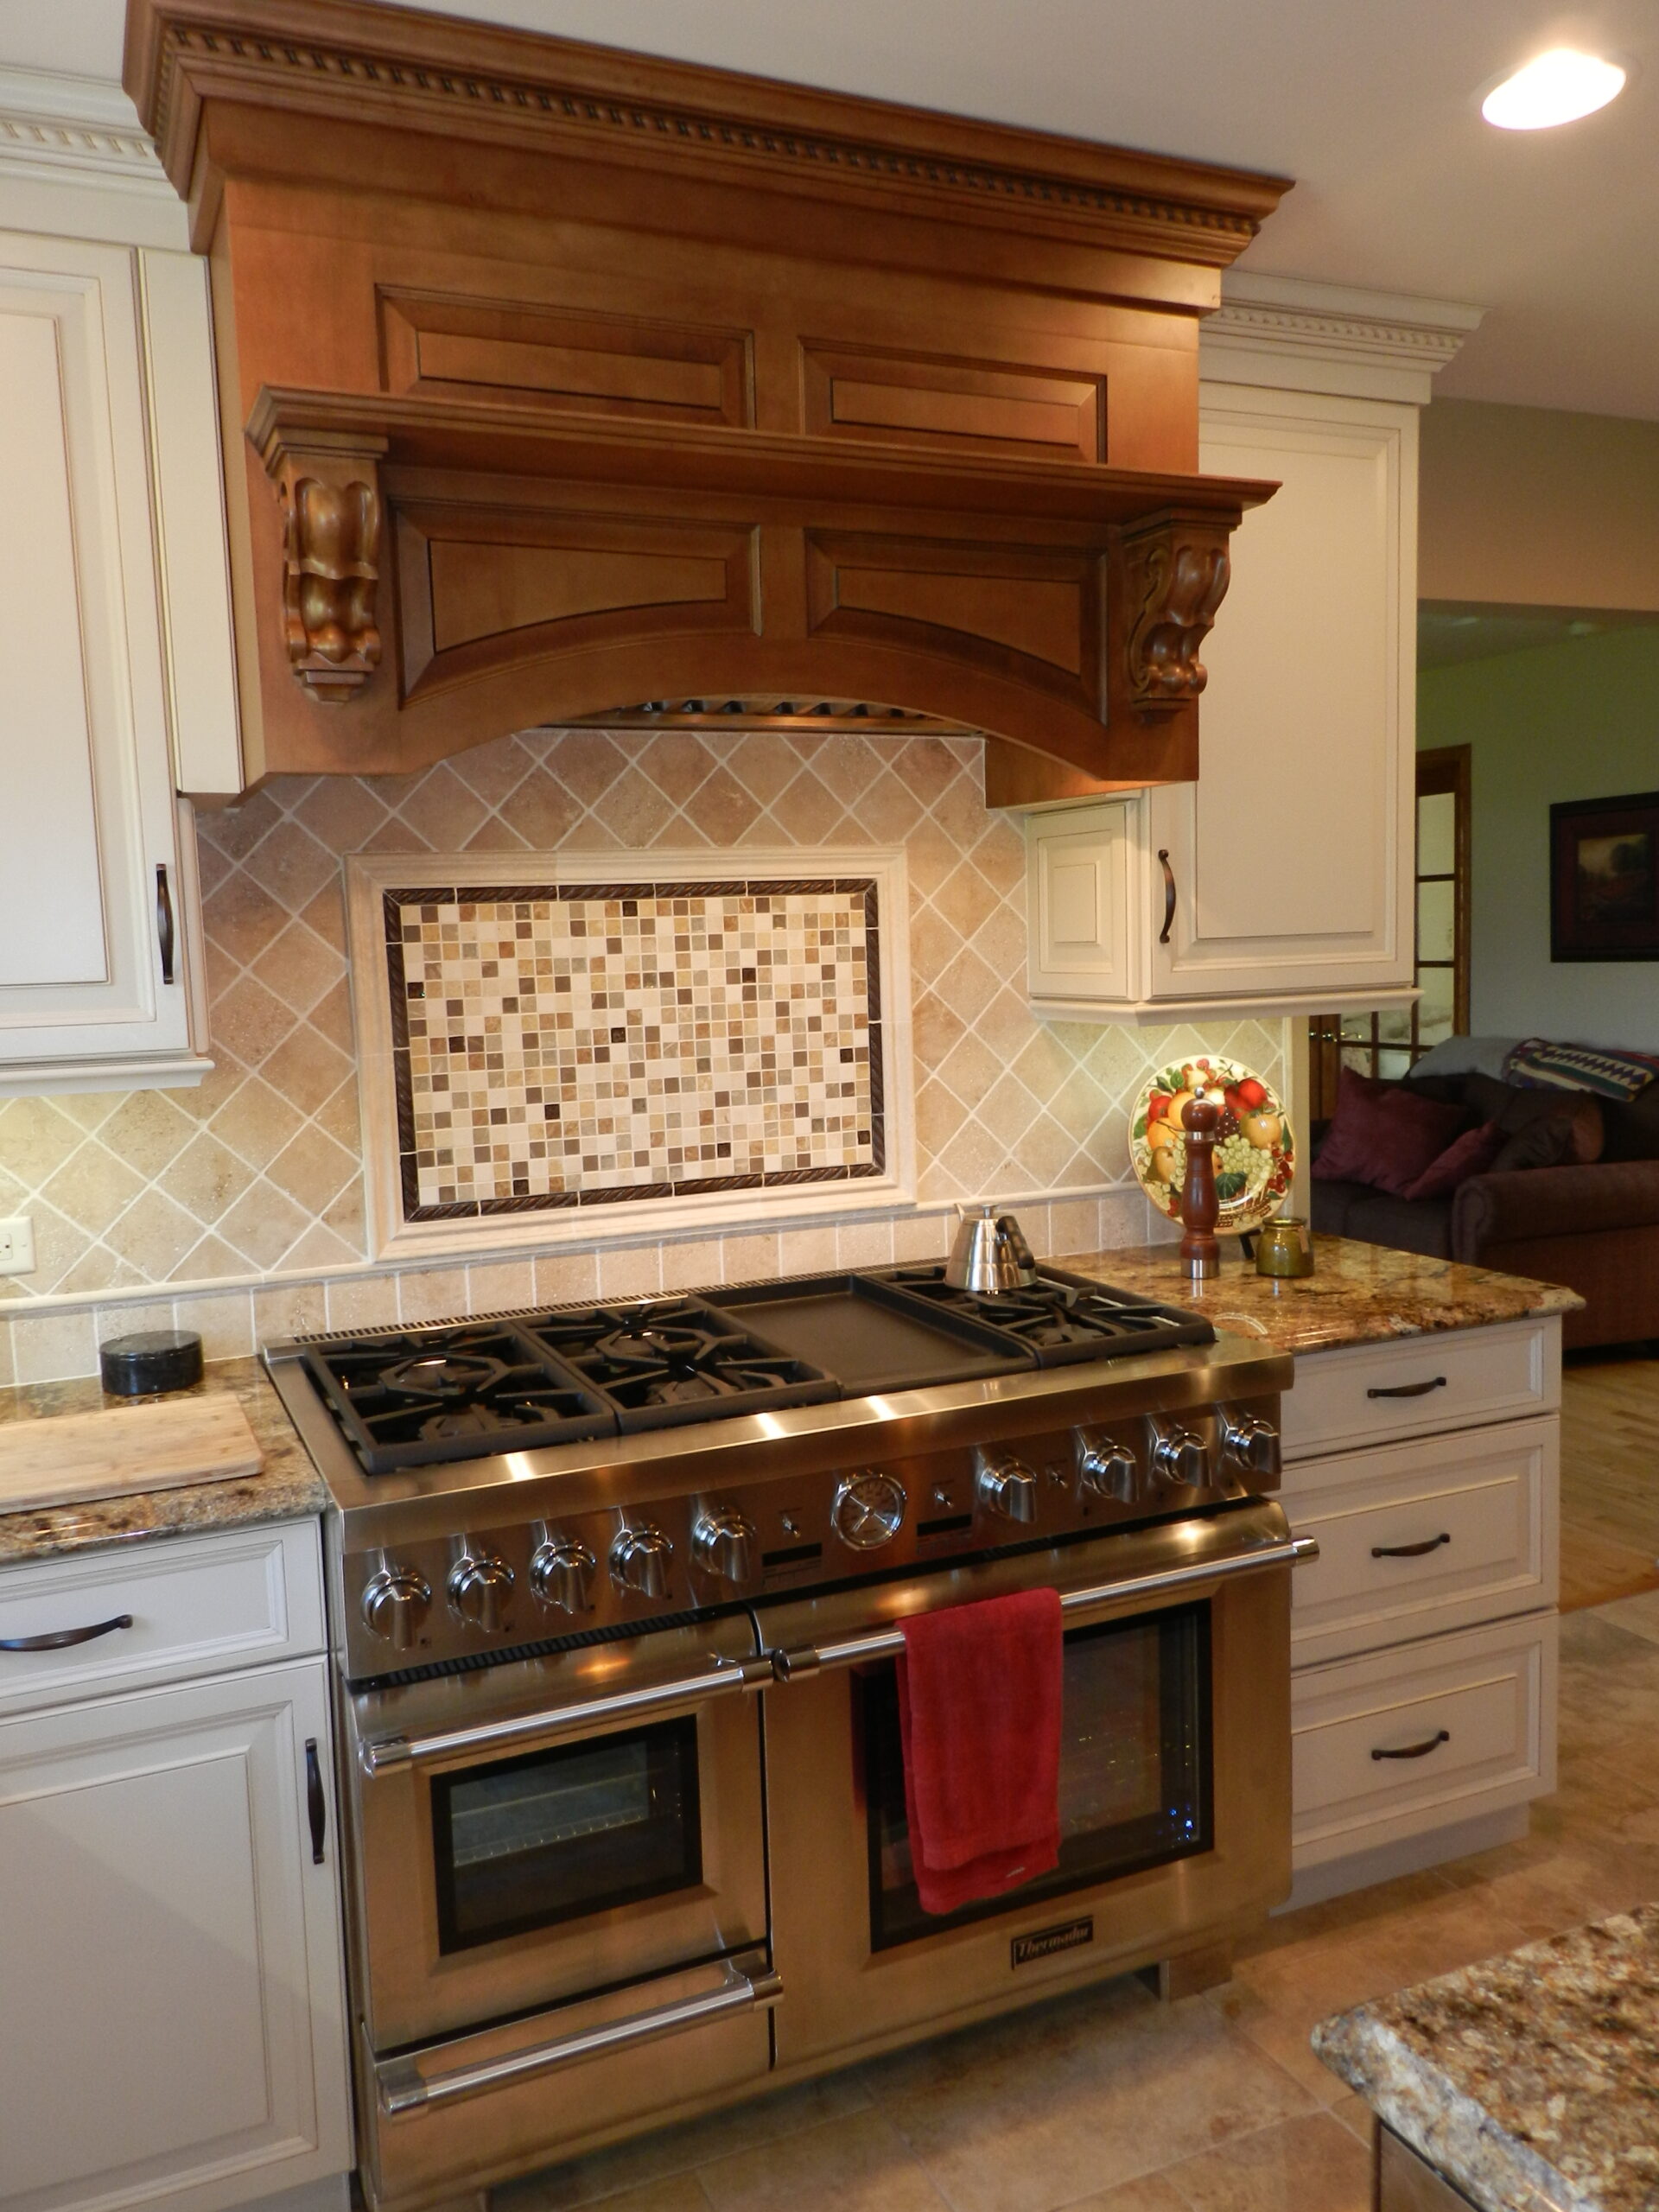 mosaic focal point behind range on kitchen backsplash | GMD Surfaces in Chicagoland and Northwest Indiana